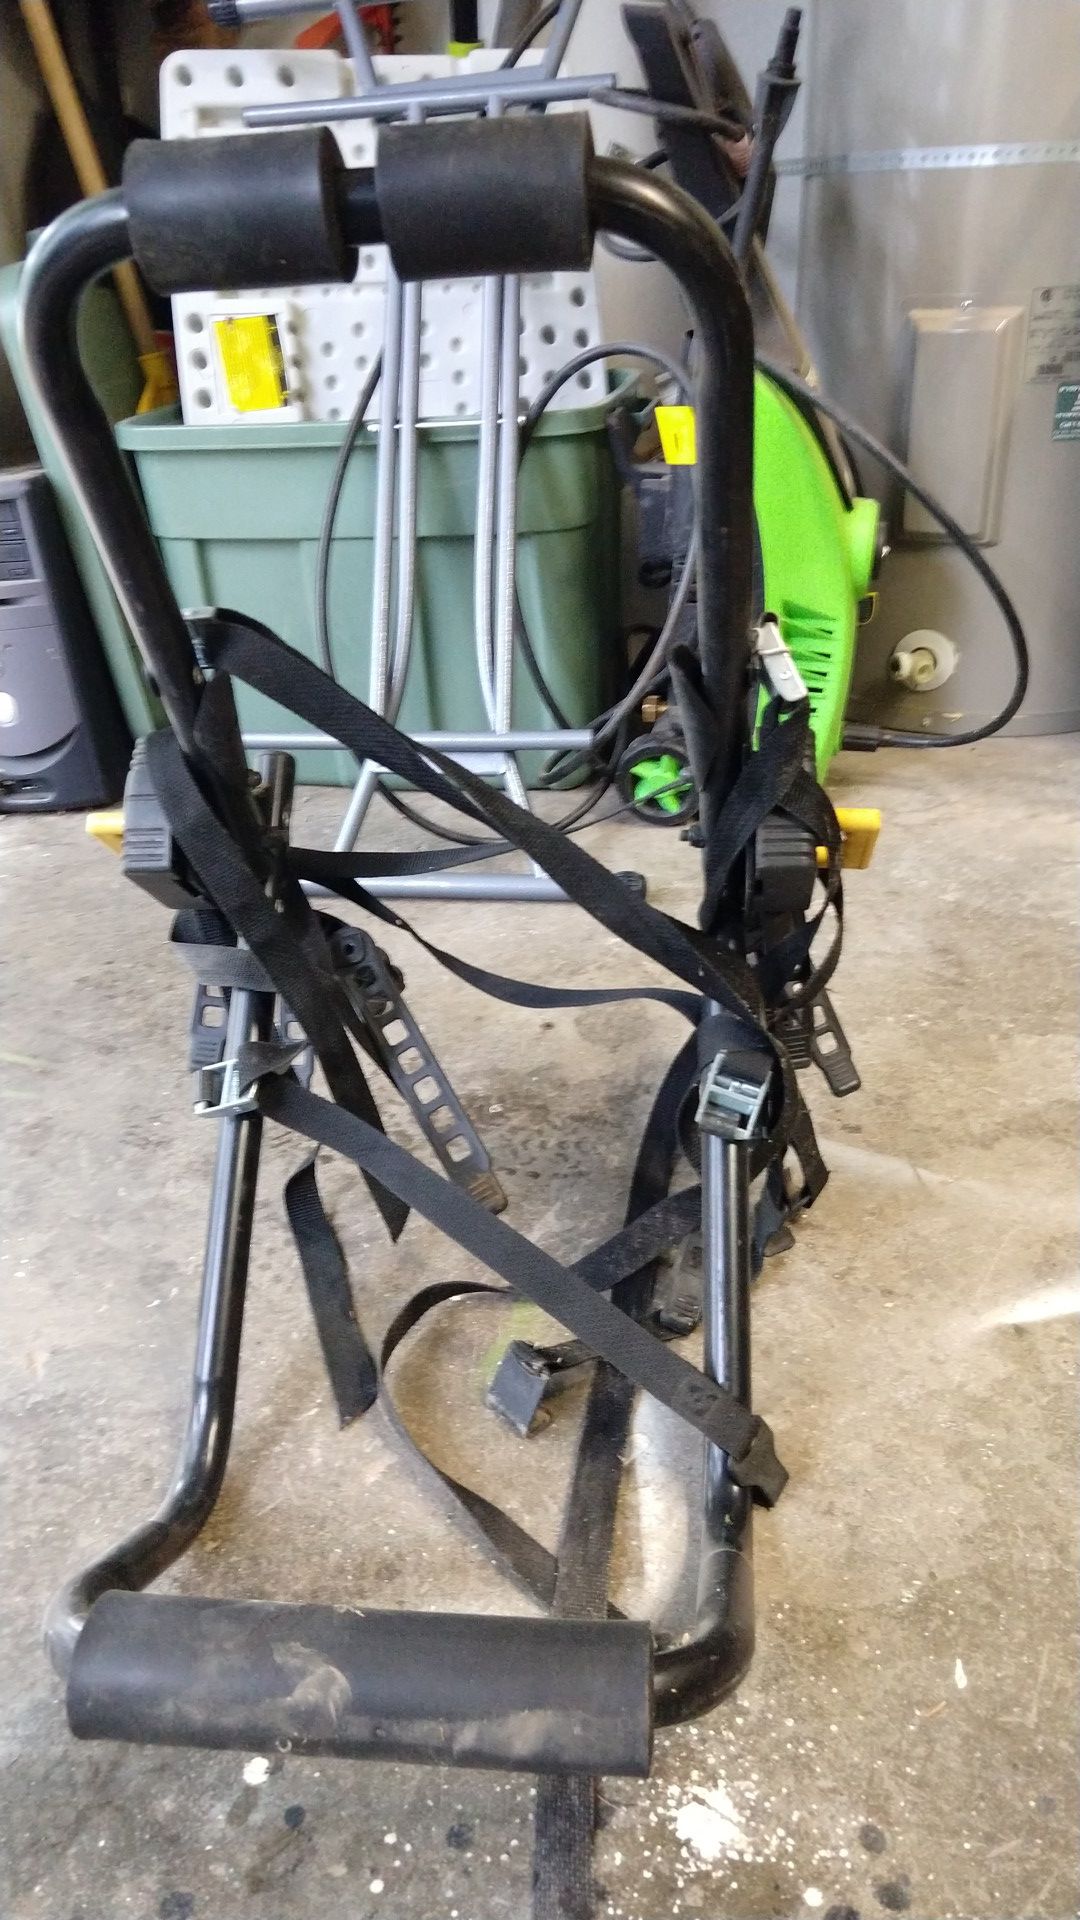 Bike rack for car